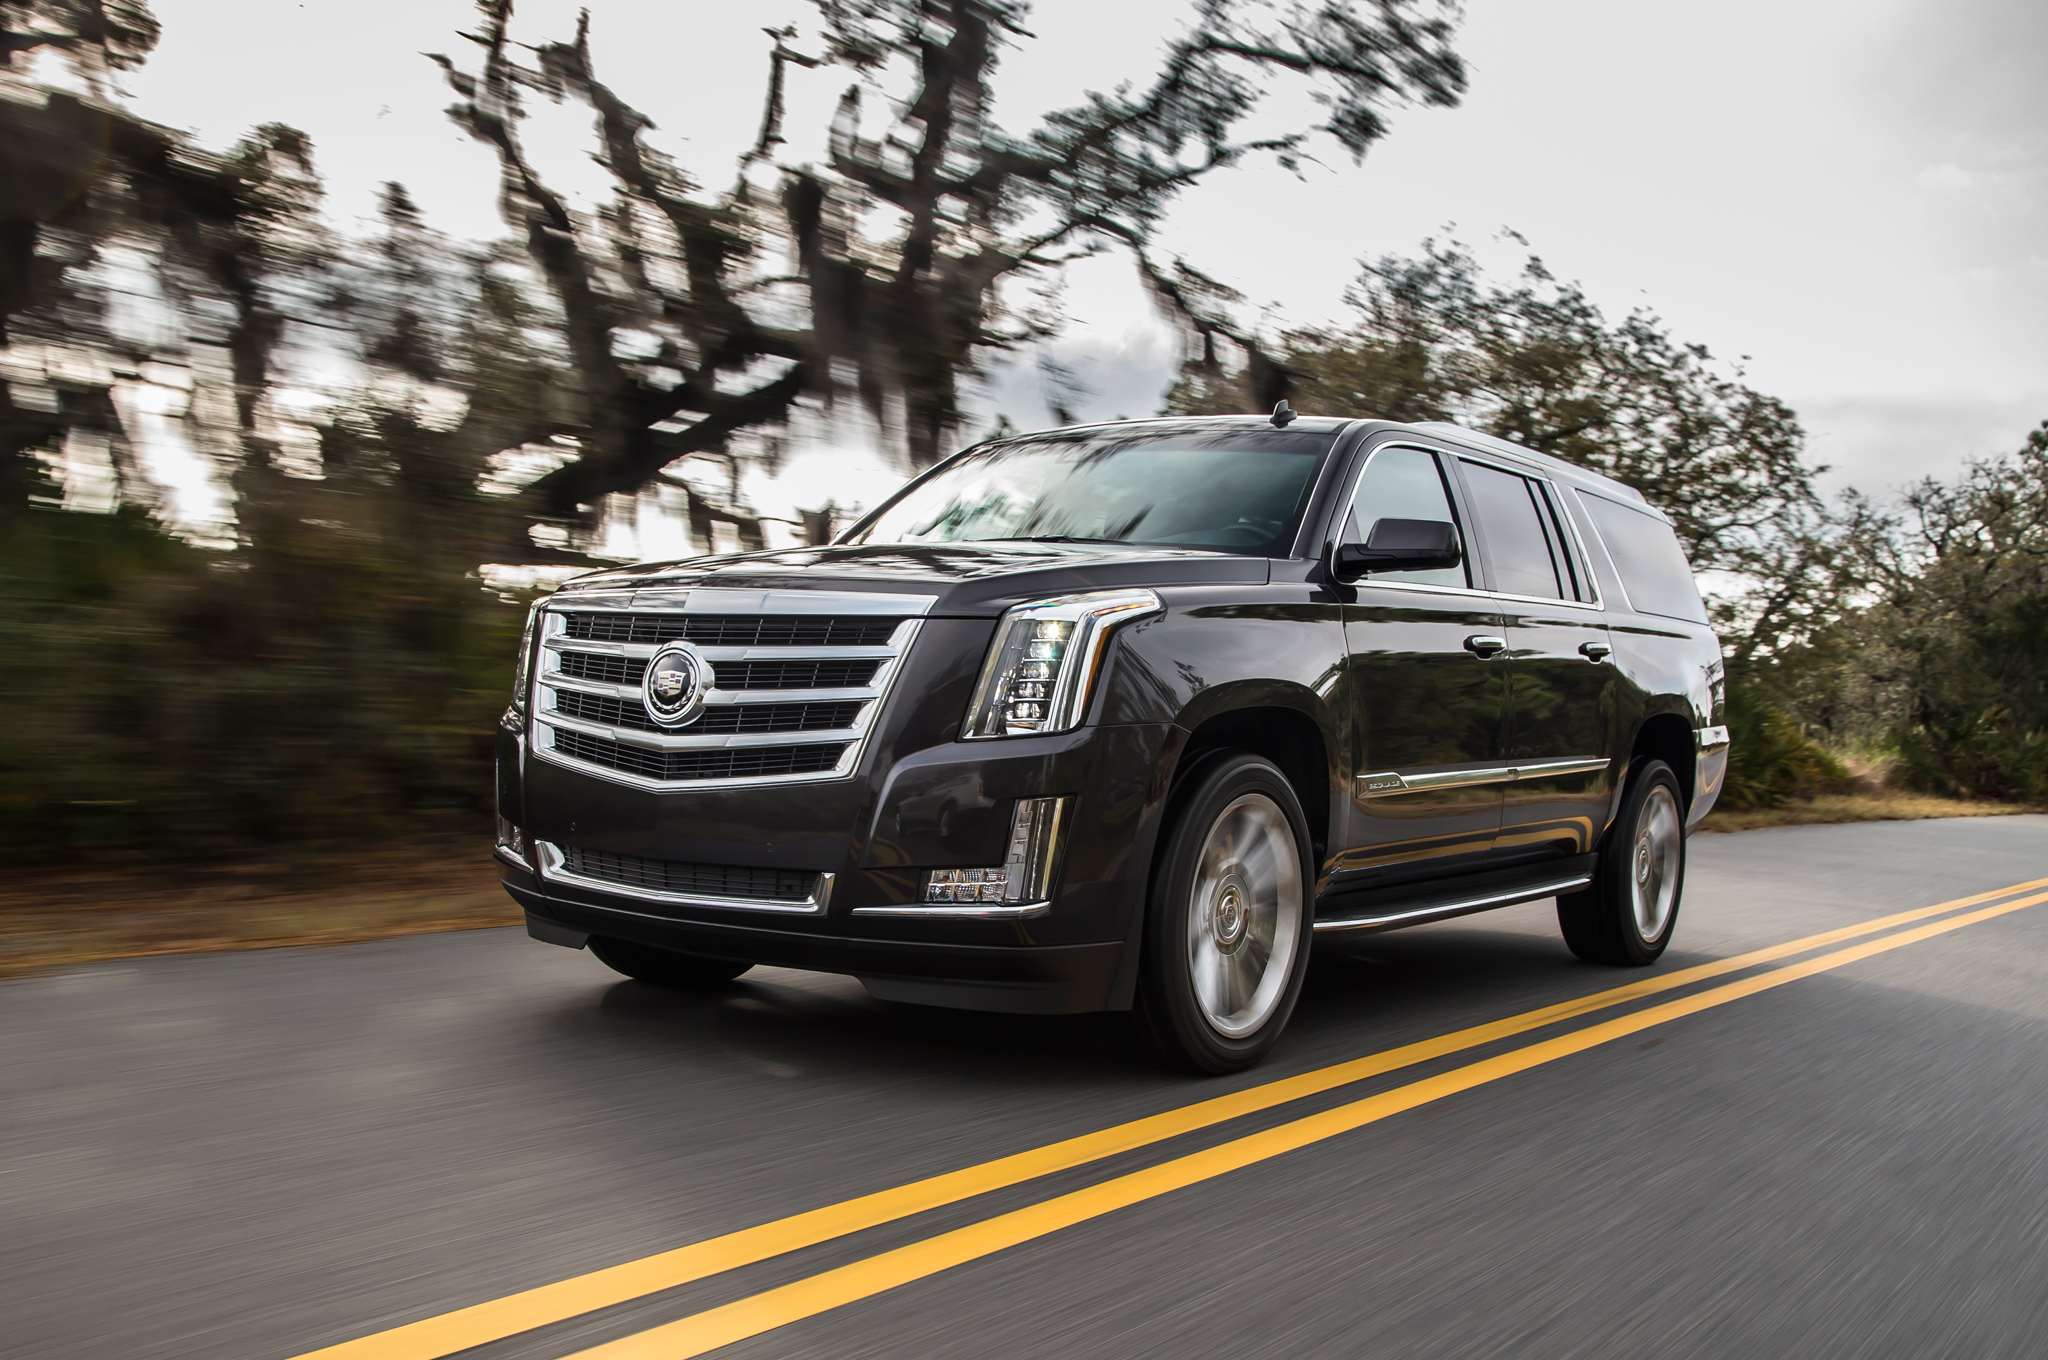 Cadillac 2015 escalade opening a new generation of luxury SUVs #7